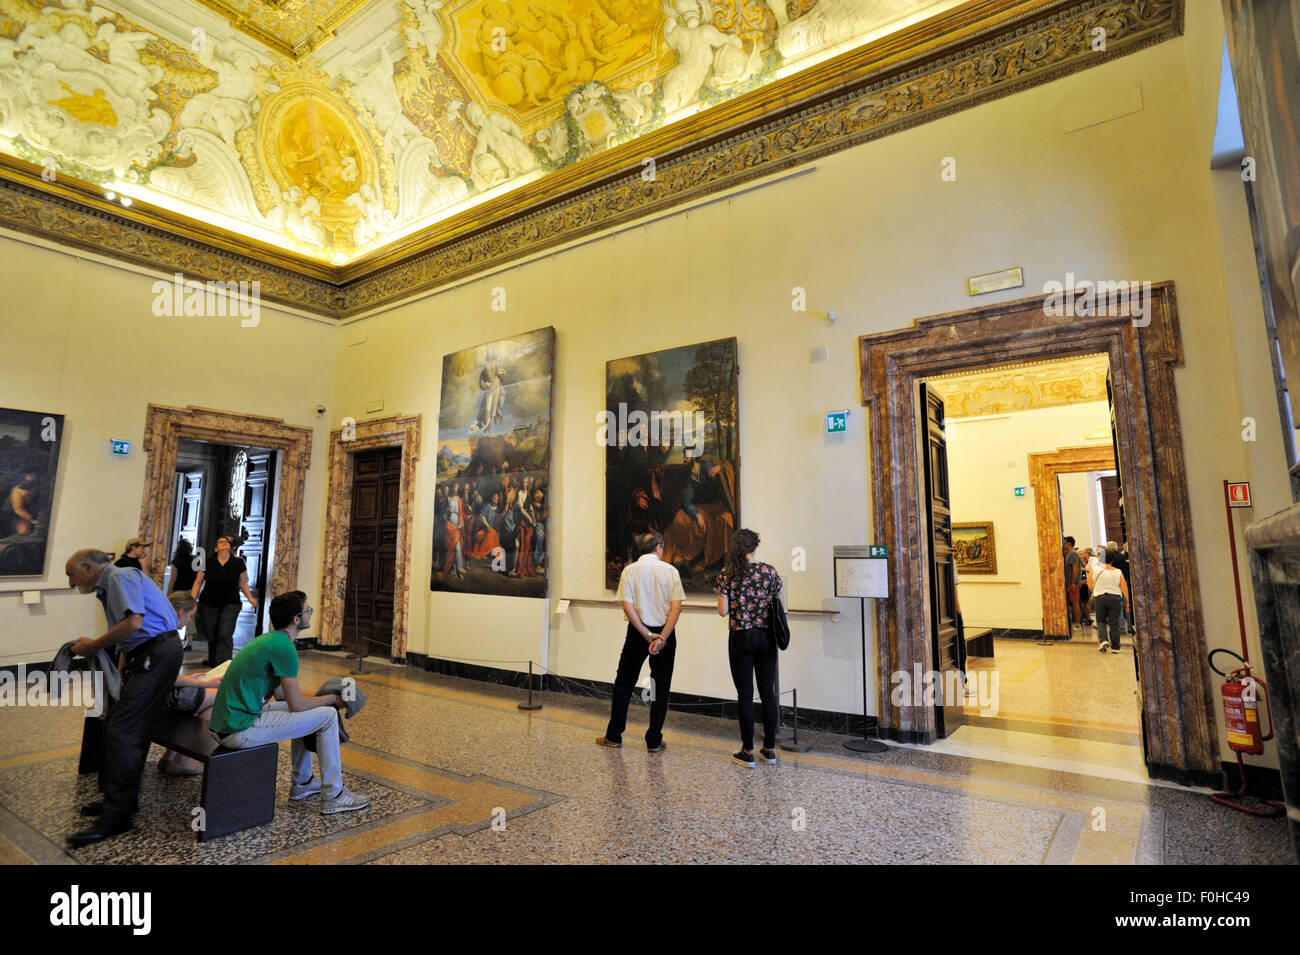 Italy, Rome, Palazzo Barberini, Galleria Nazionale d'Arte Antica, National Gallery of Ancient Art Stock Photo